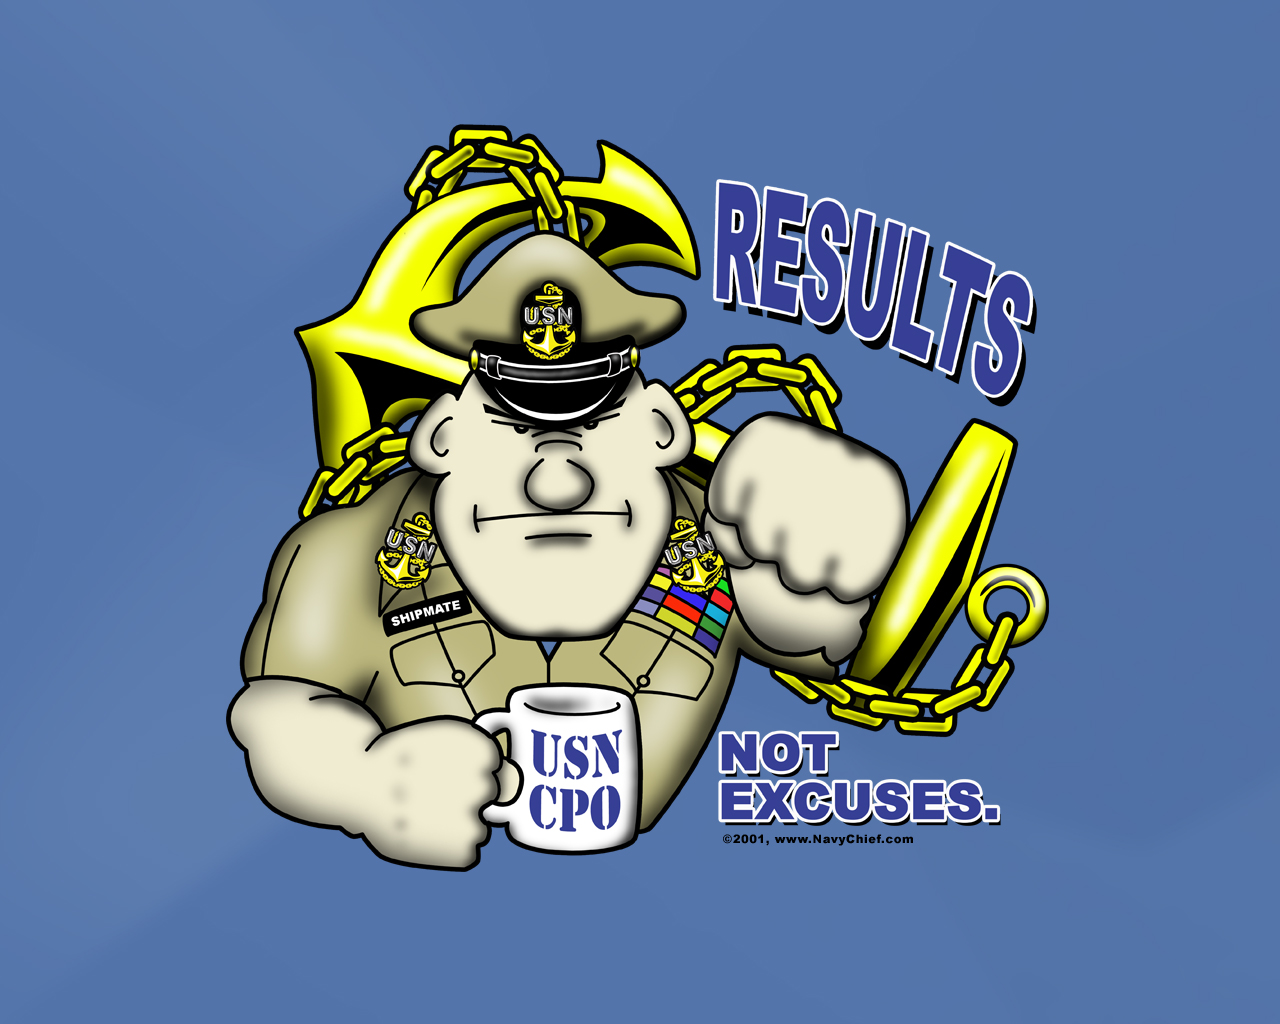 Navy Chief Image